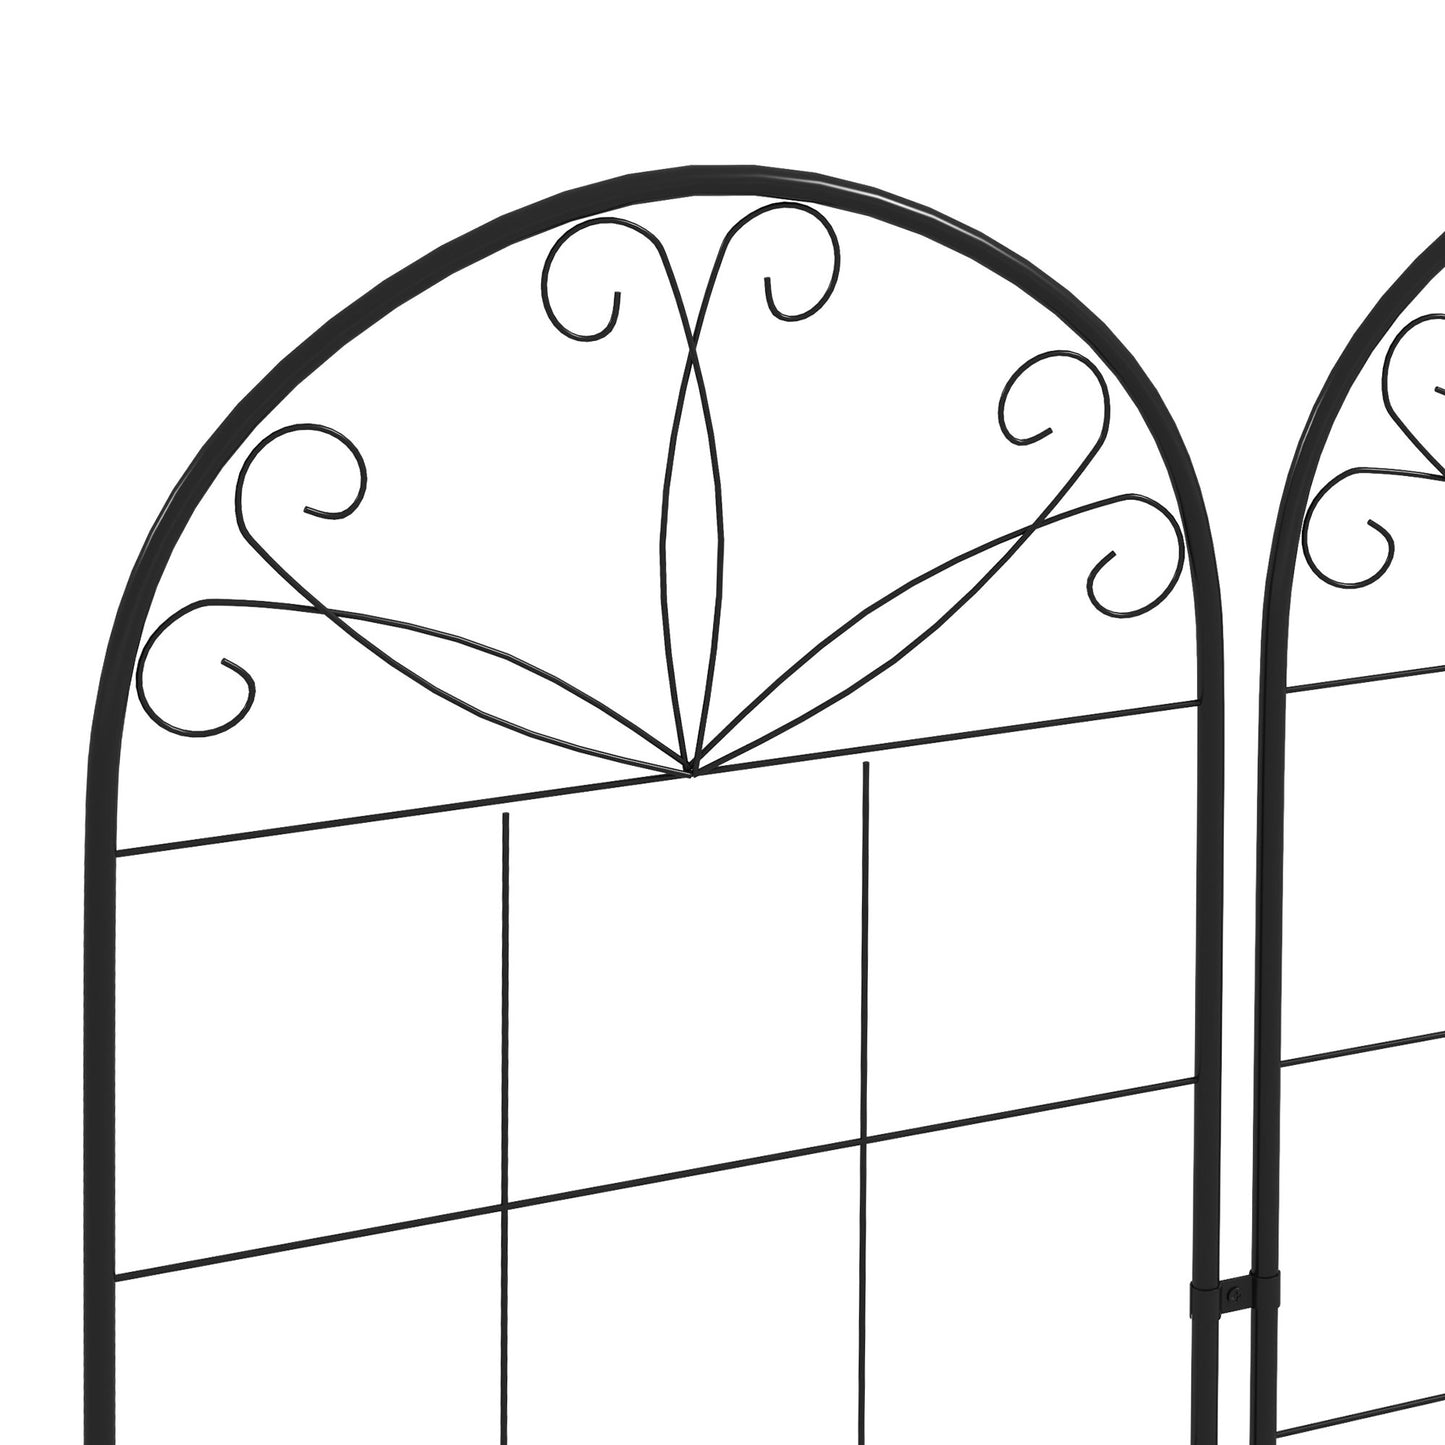 Outsunny Set of 2 Metal Garden Trellises: Climbing Plant Support Frames, Decorative Grid Design